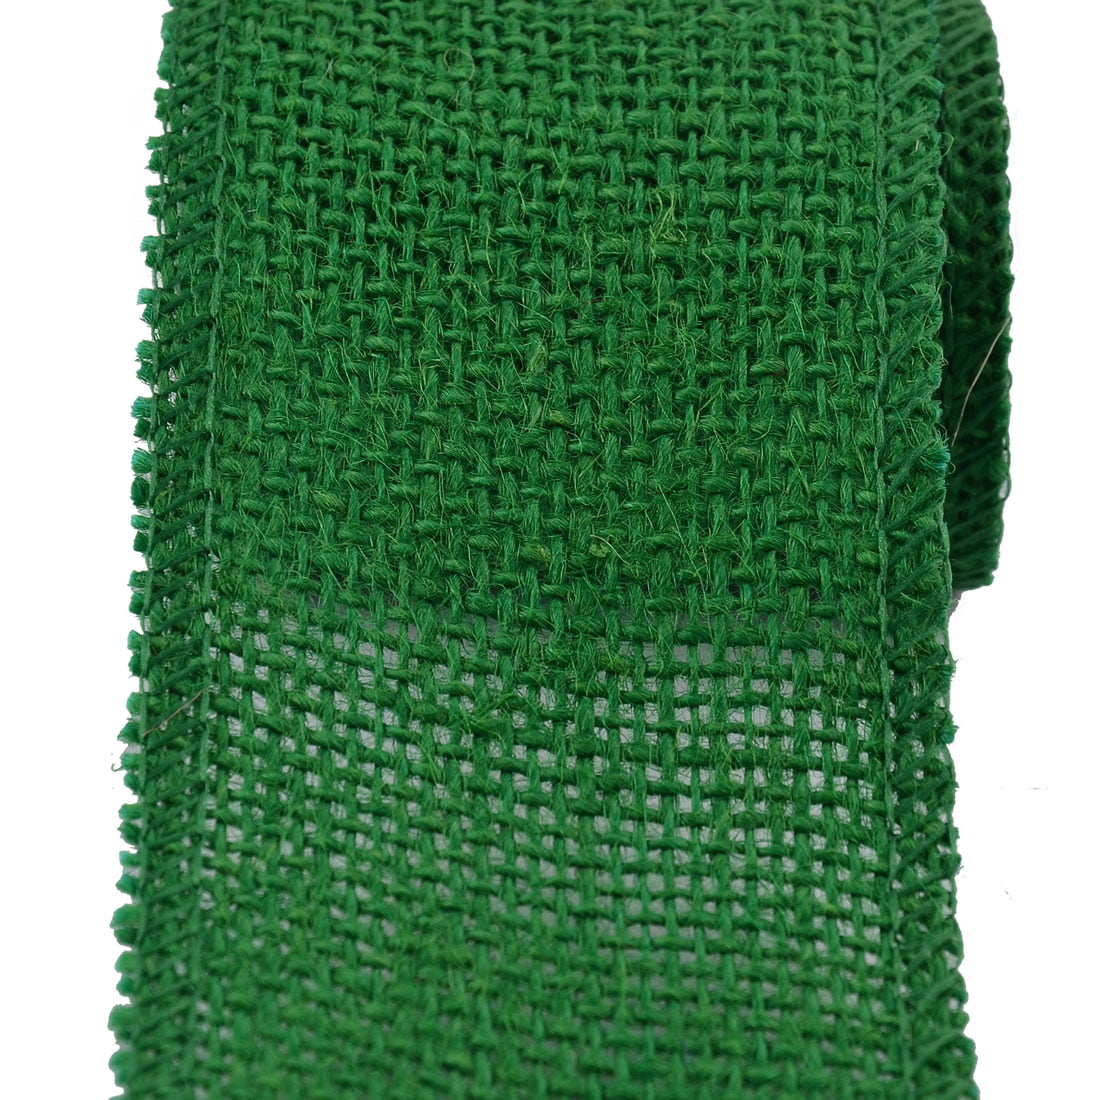 Yarn hanging, beads & greens – Buttons & Burlap LLC